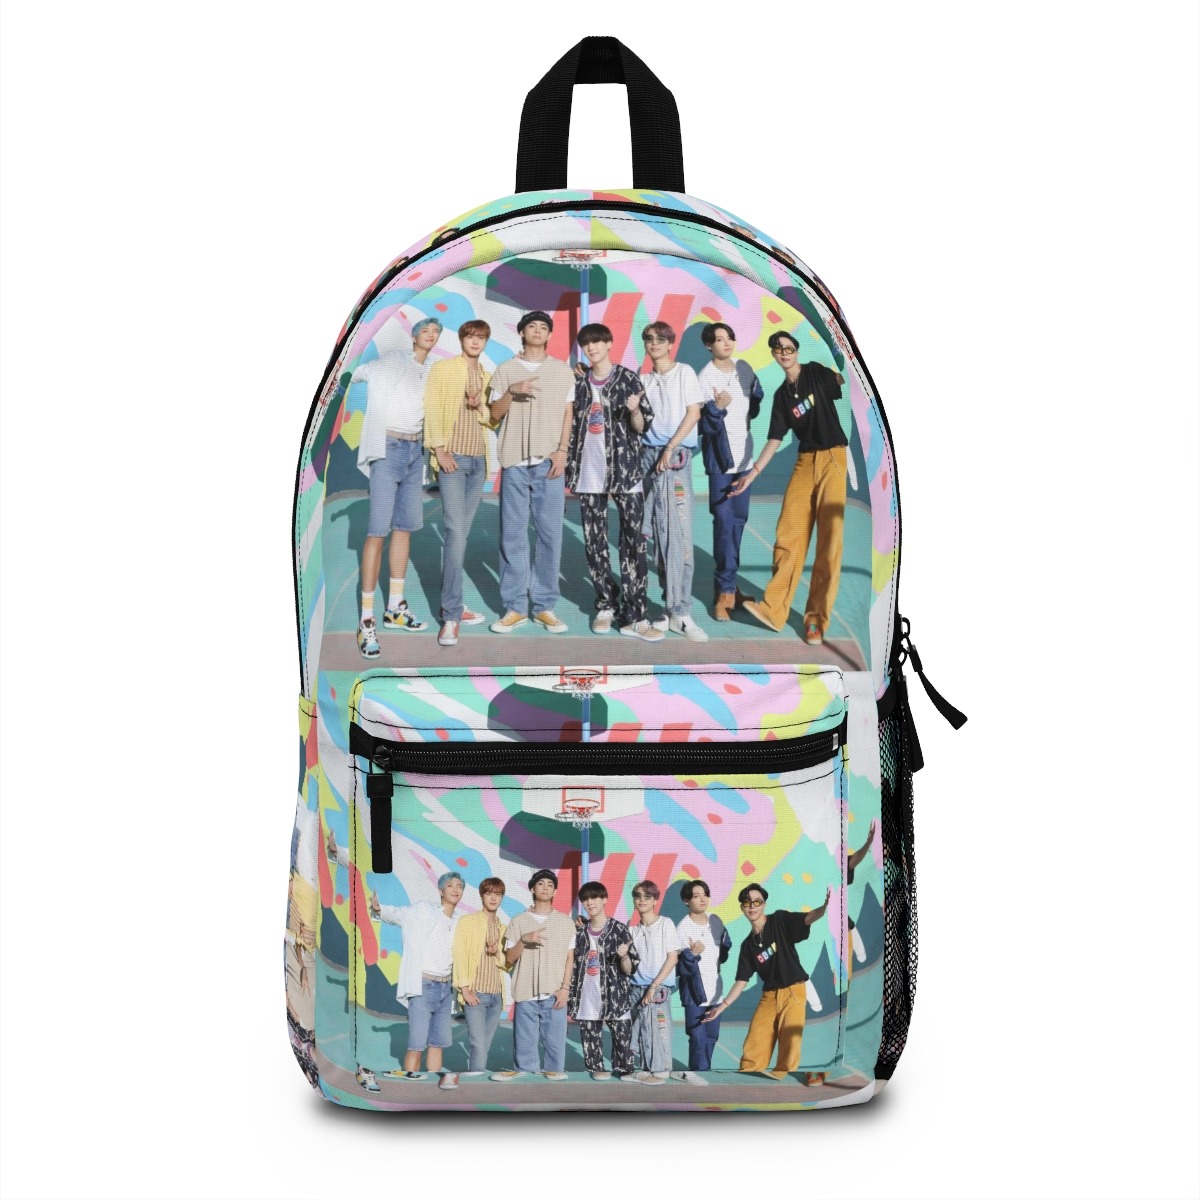 BTS Travel Bags